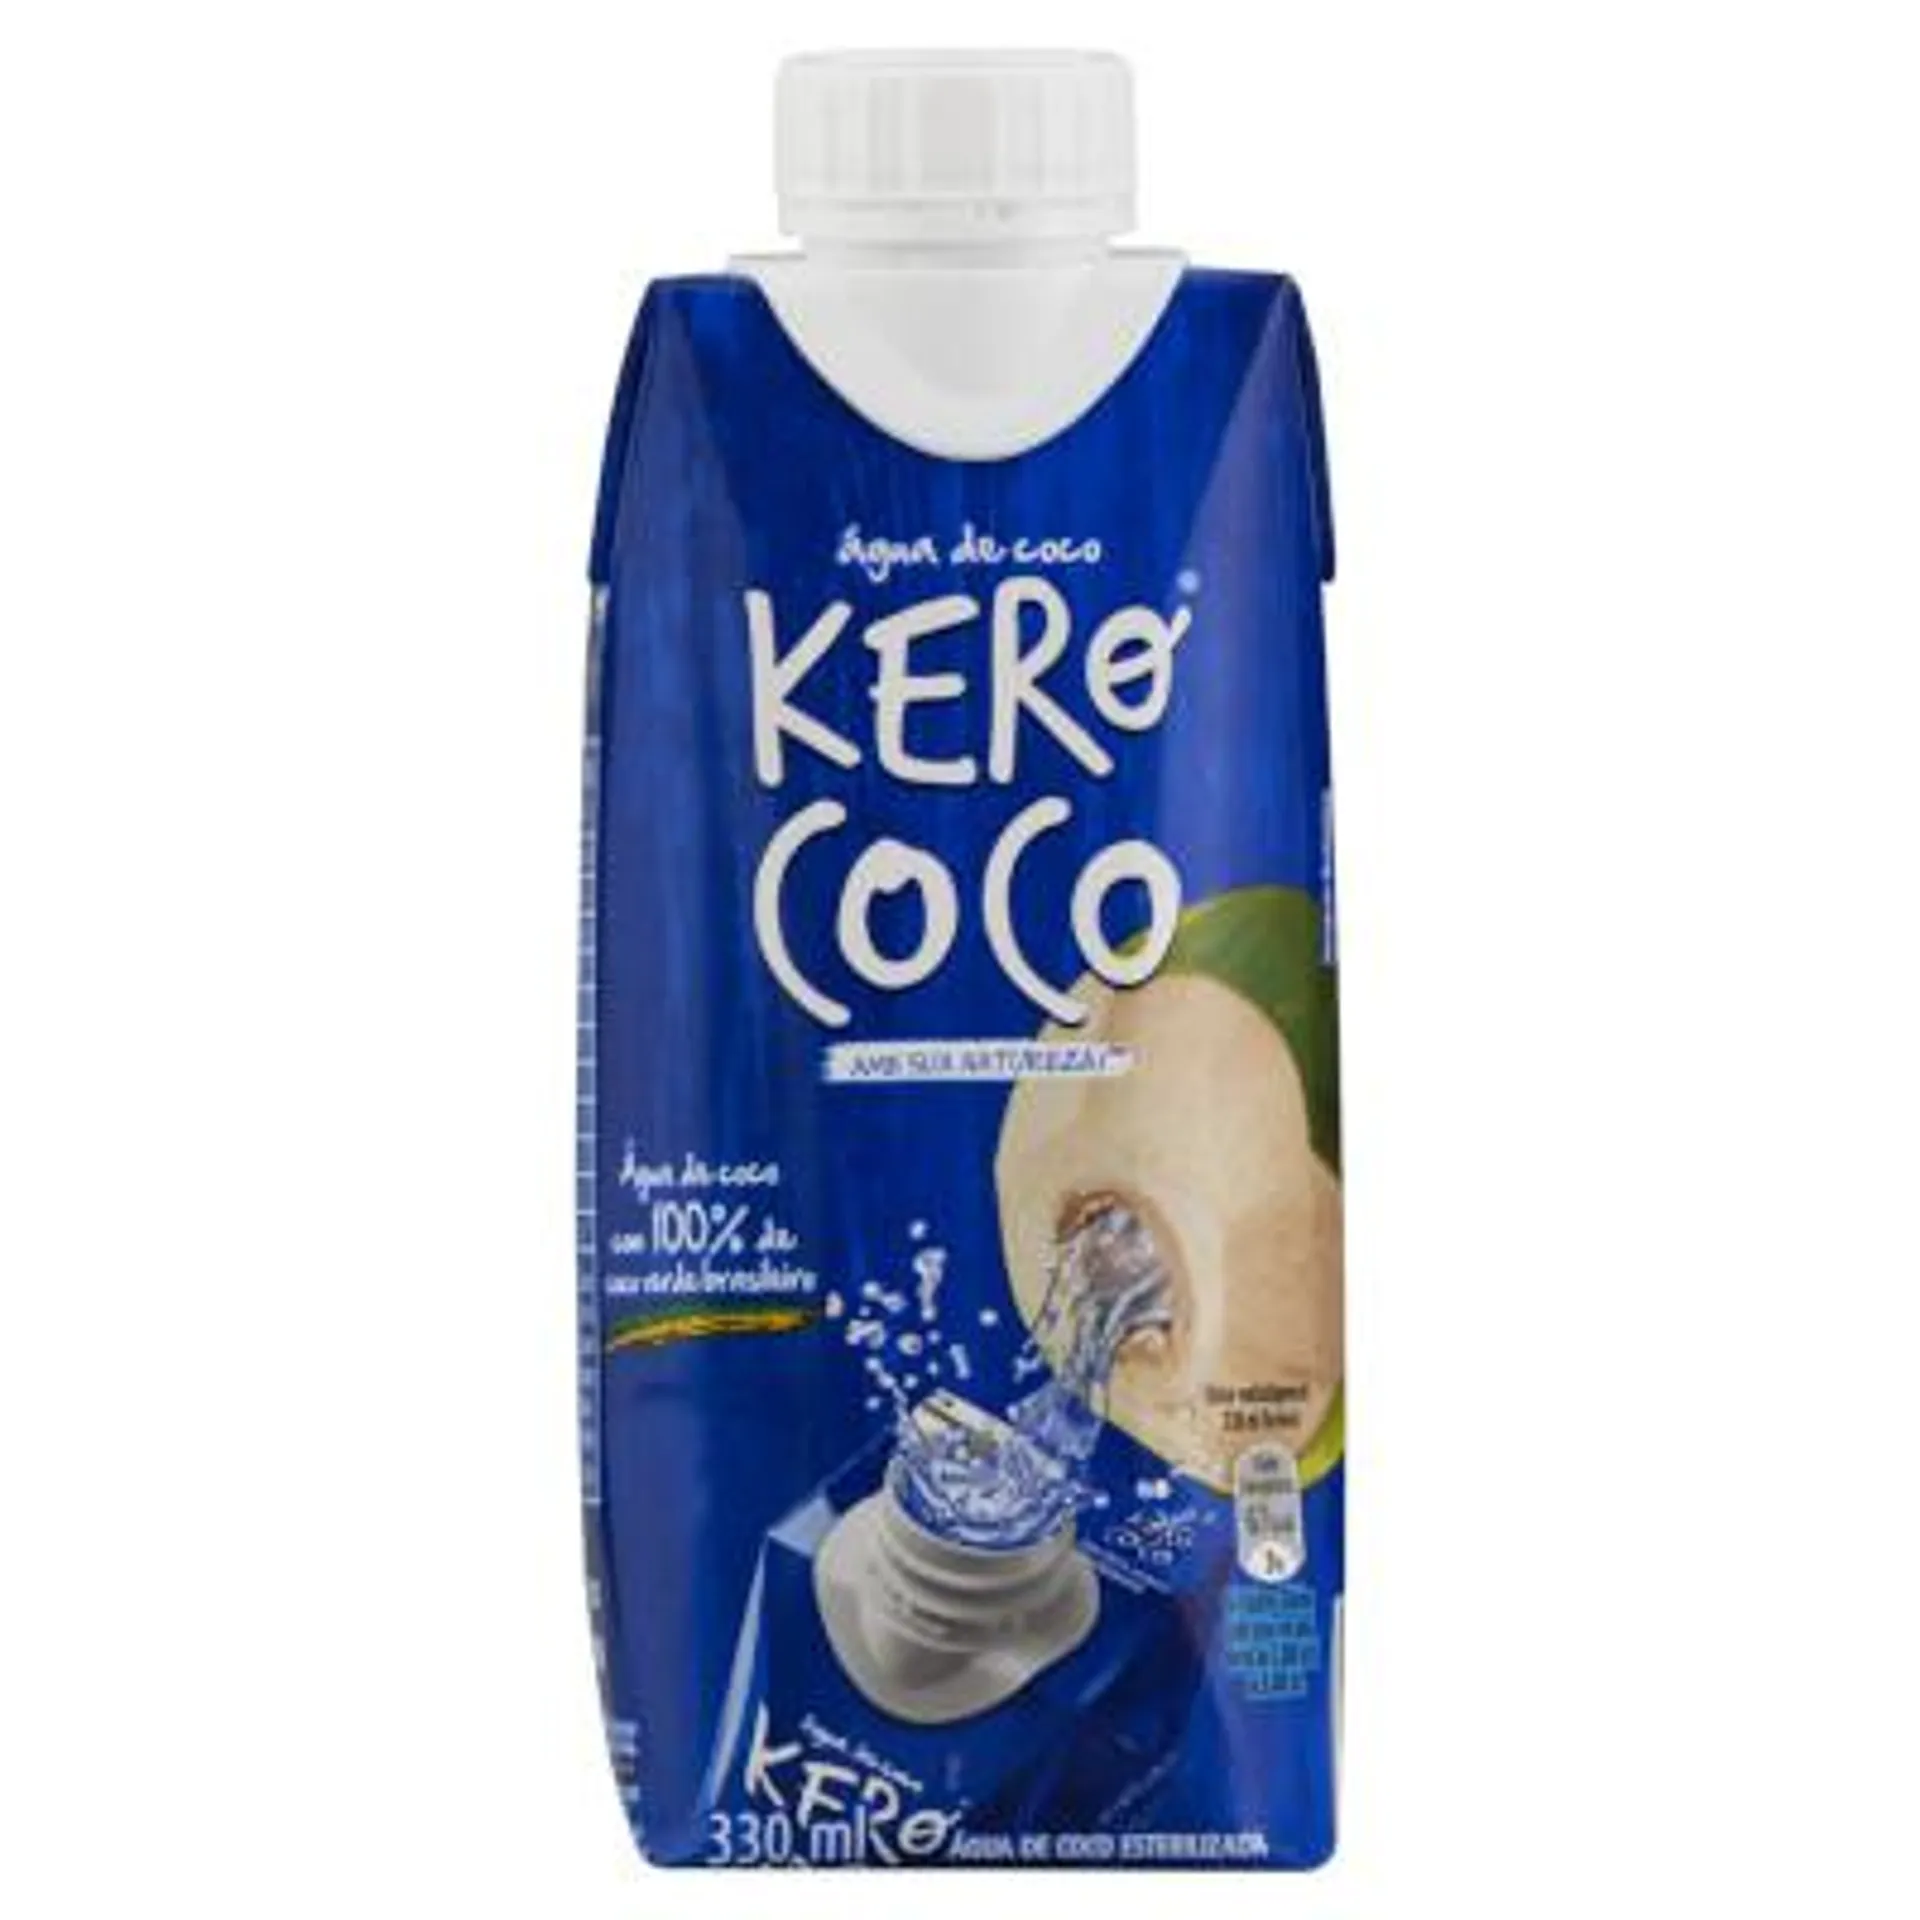 Água de Coco tetra pak 330ml - Kero Coco